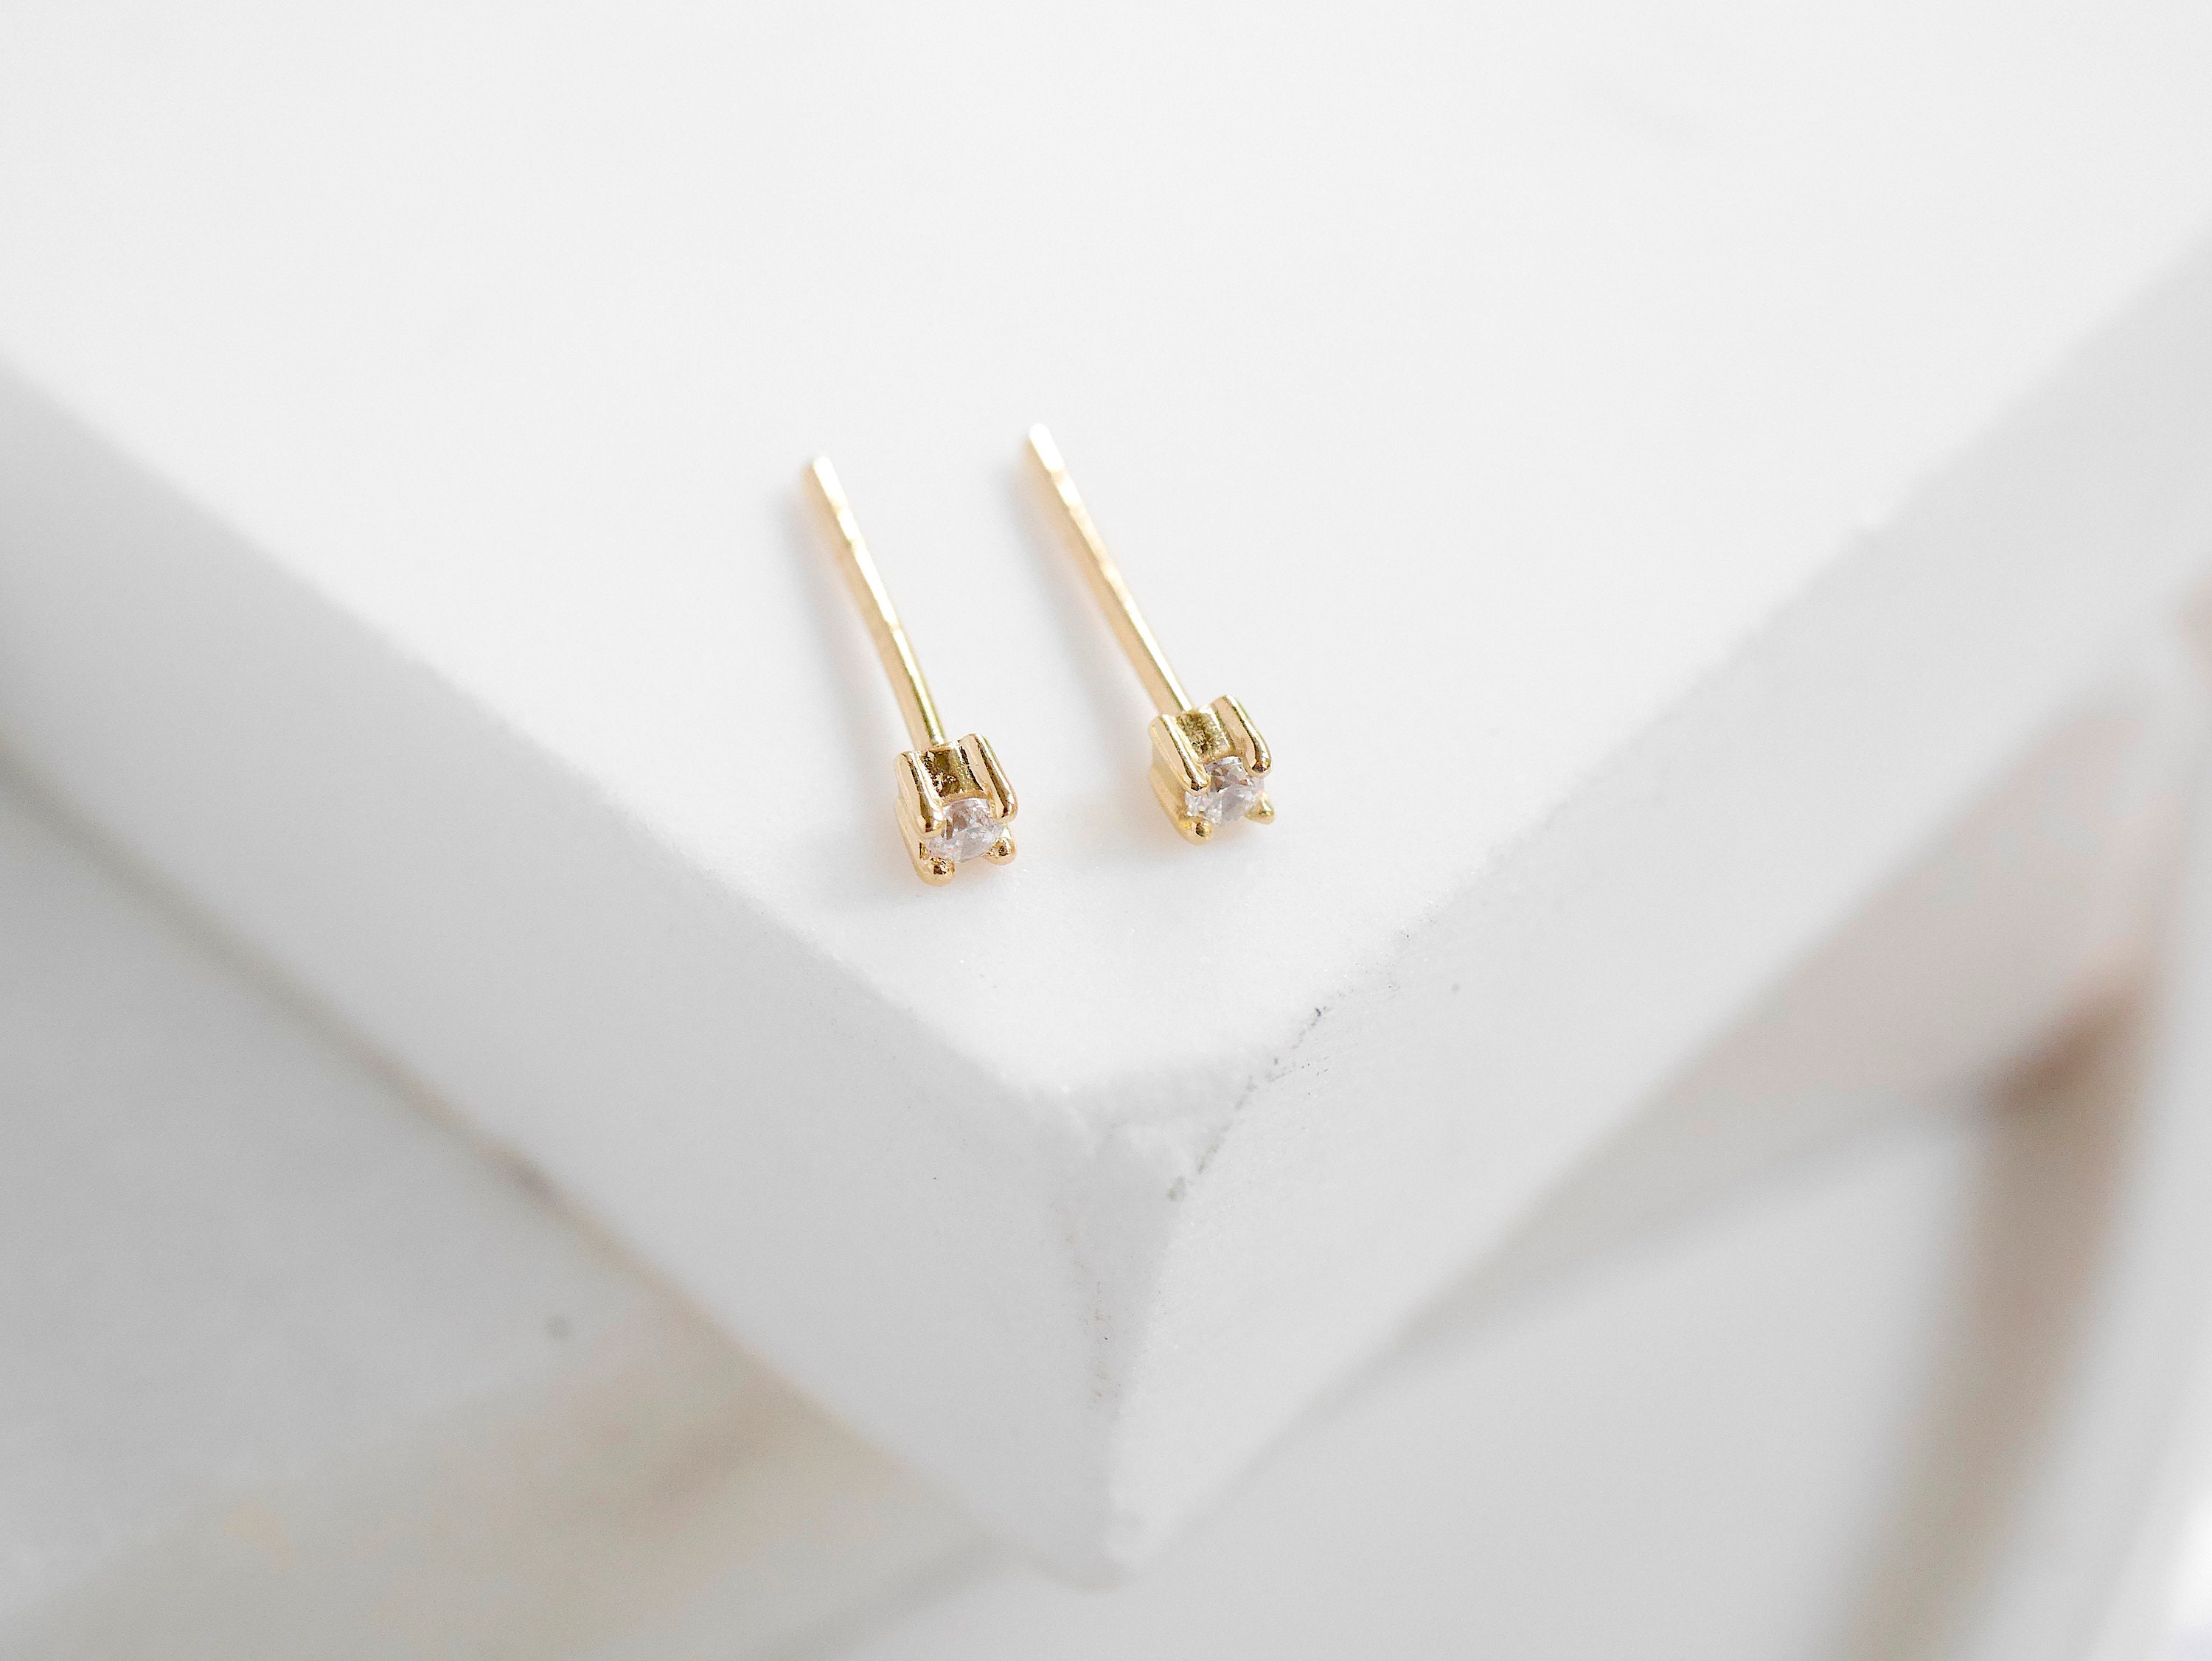 Tiny Gold Earrings Earring Studs 14k Gold Earrings | Etsy